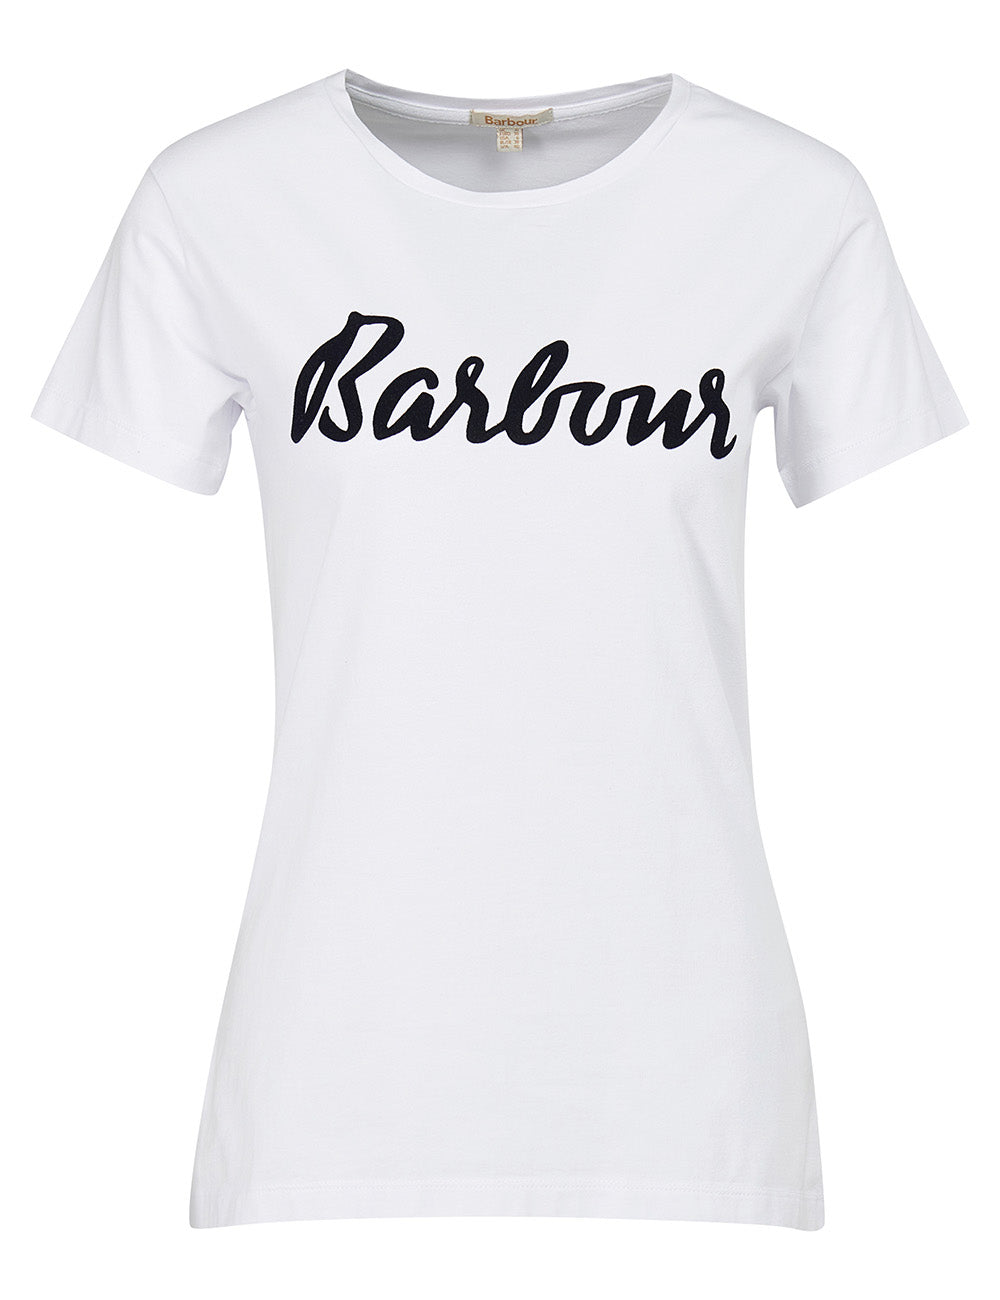 Barbour Otterburn T-Shirt - White/Navy